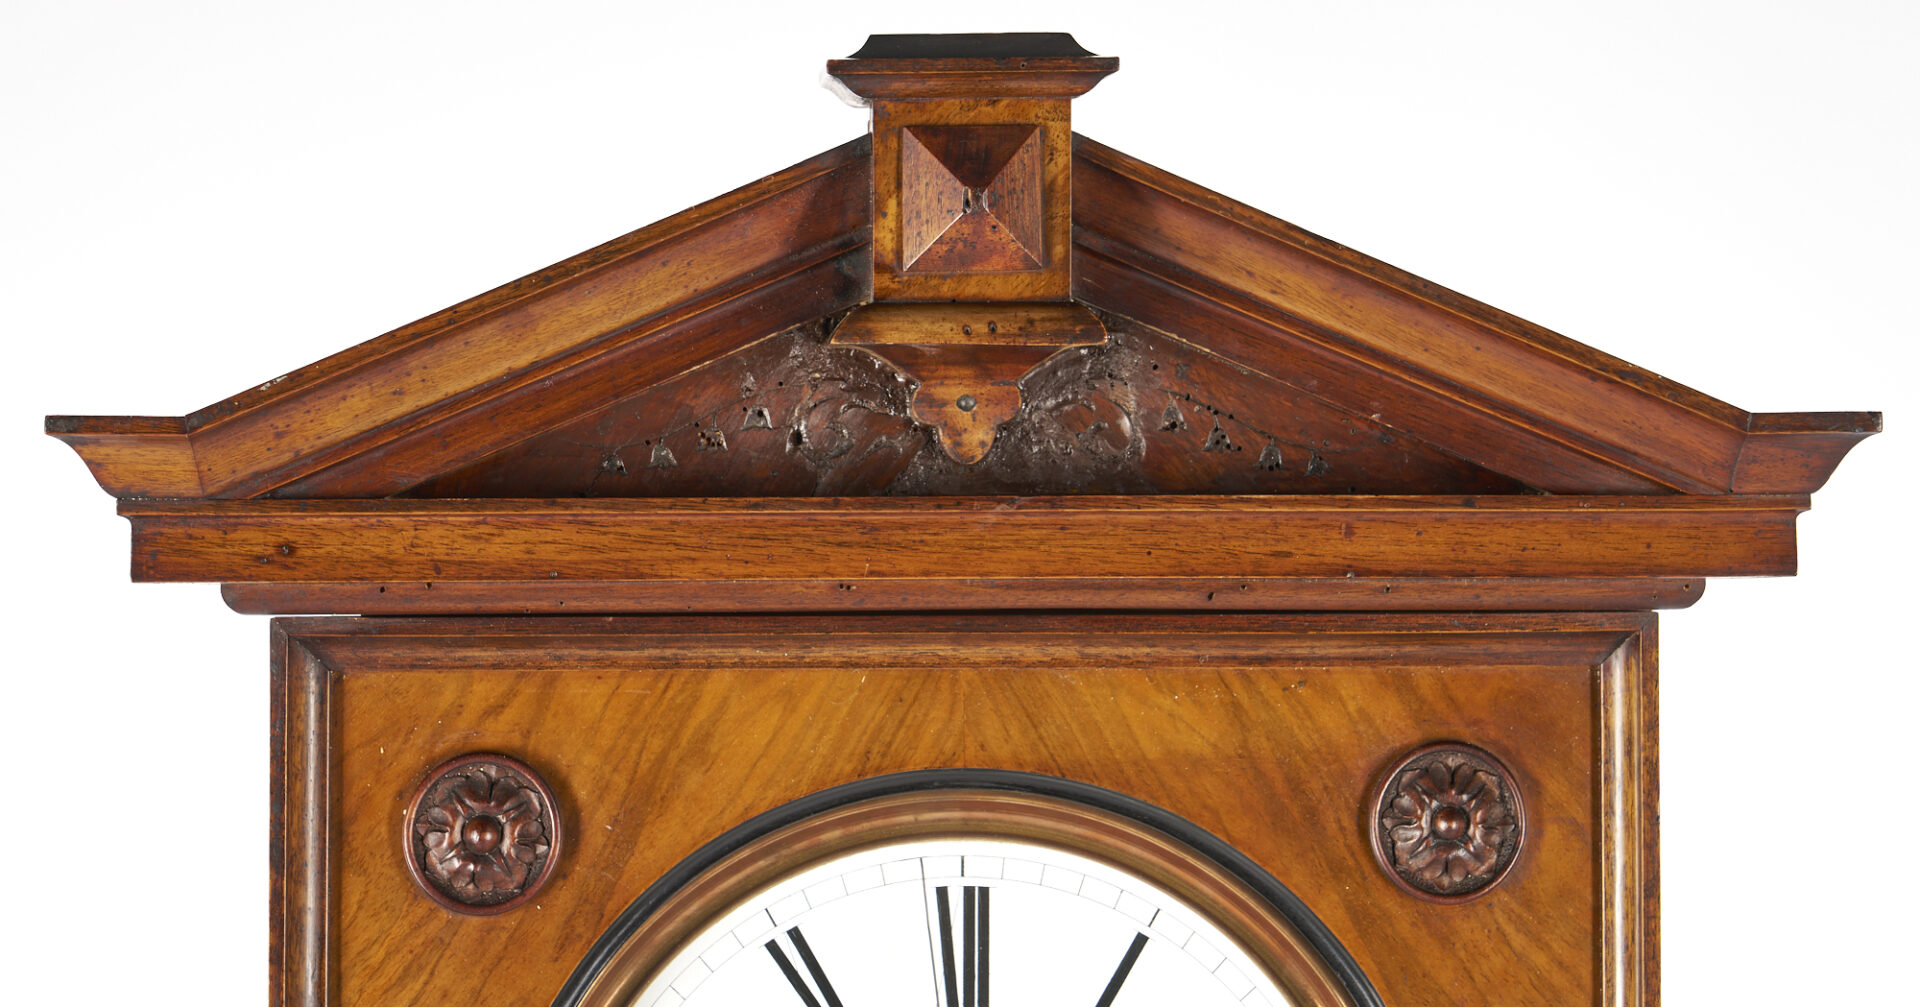 Lot 196: Jeweler's Regulator Floor Clock, Lenzkirch